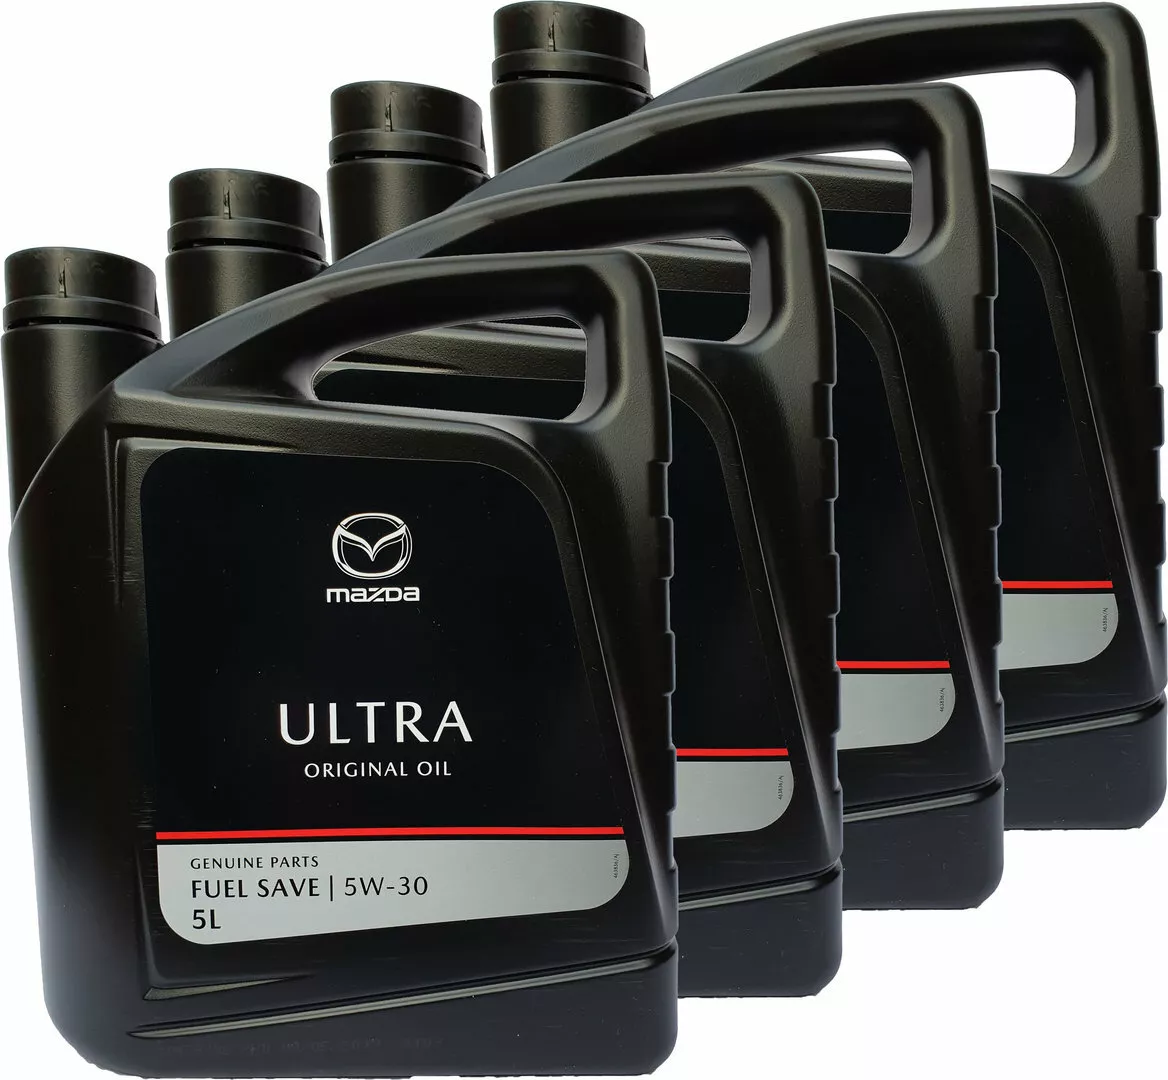 Купить масло mazda. Mazda 5w30 Original Ultra. Mazda Original Oil Ultra 5w-30. Mazda Ultra 5w-30. Масло Мазда 5w30 оригинал.